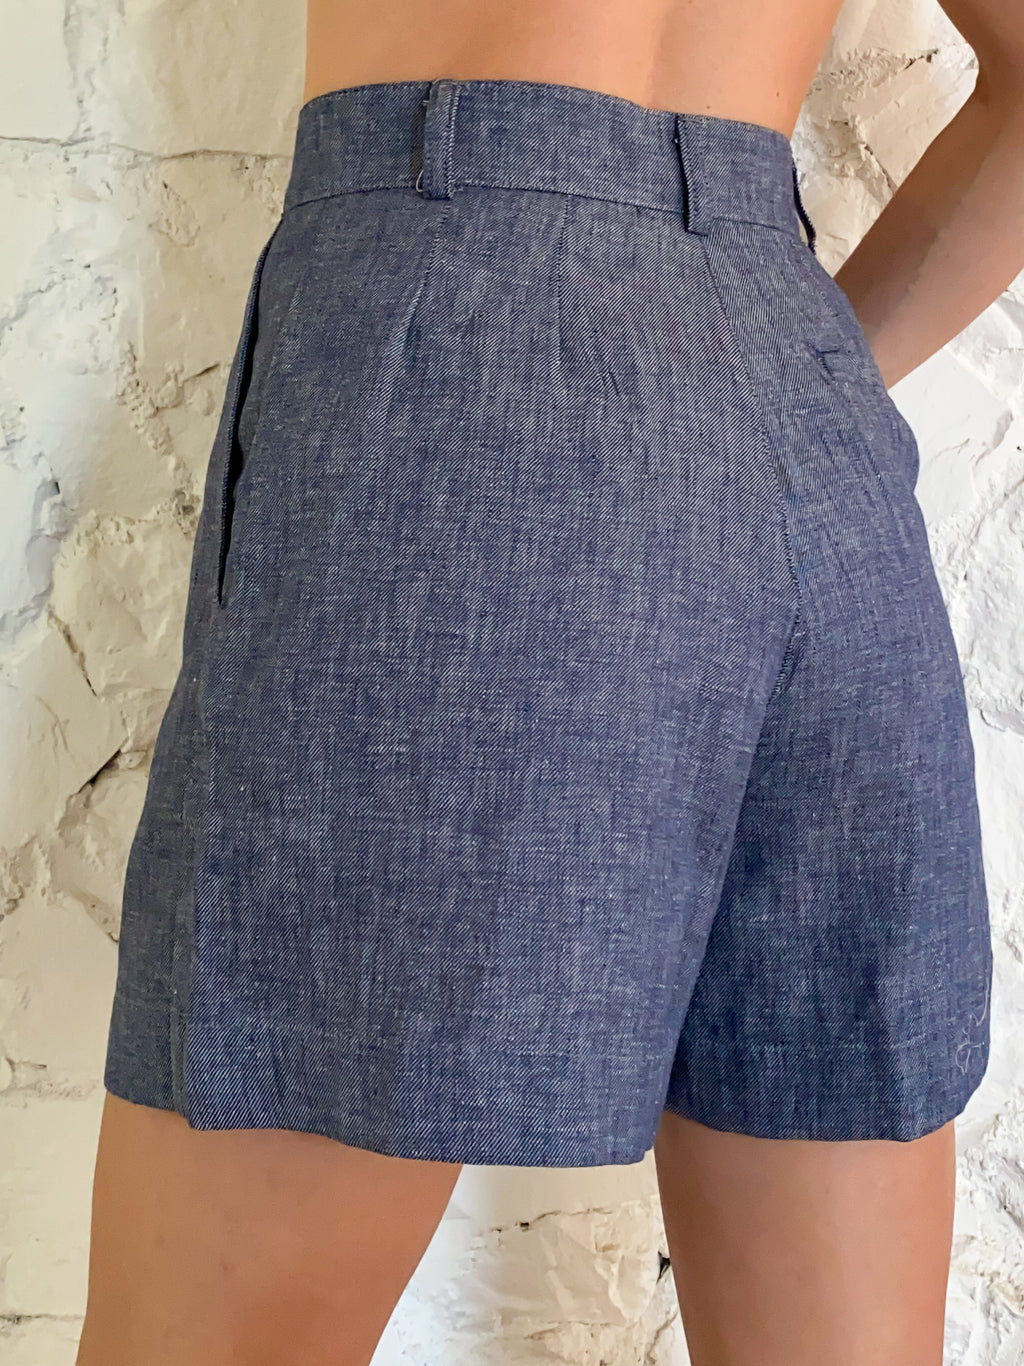 The Shorts - Chambray Linen